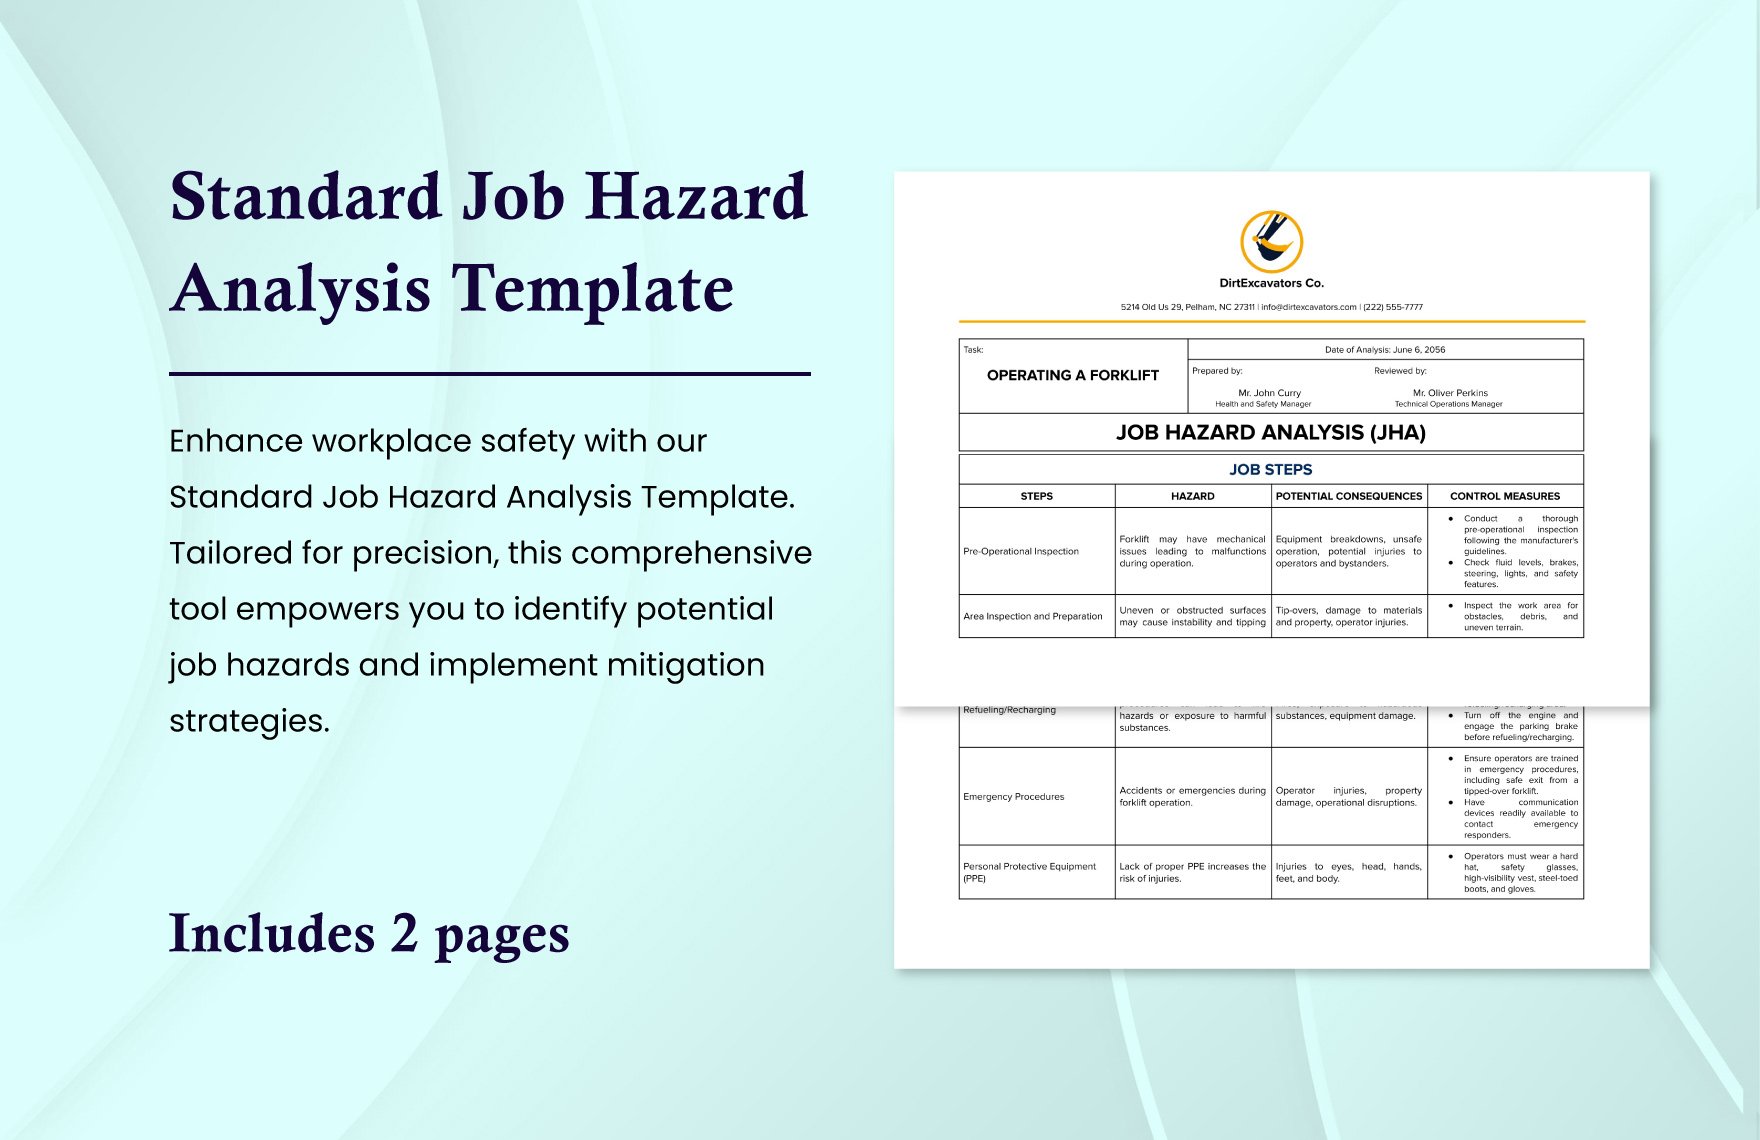 Standard Job Hazard Analysis Template